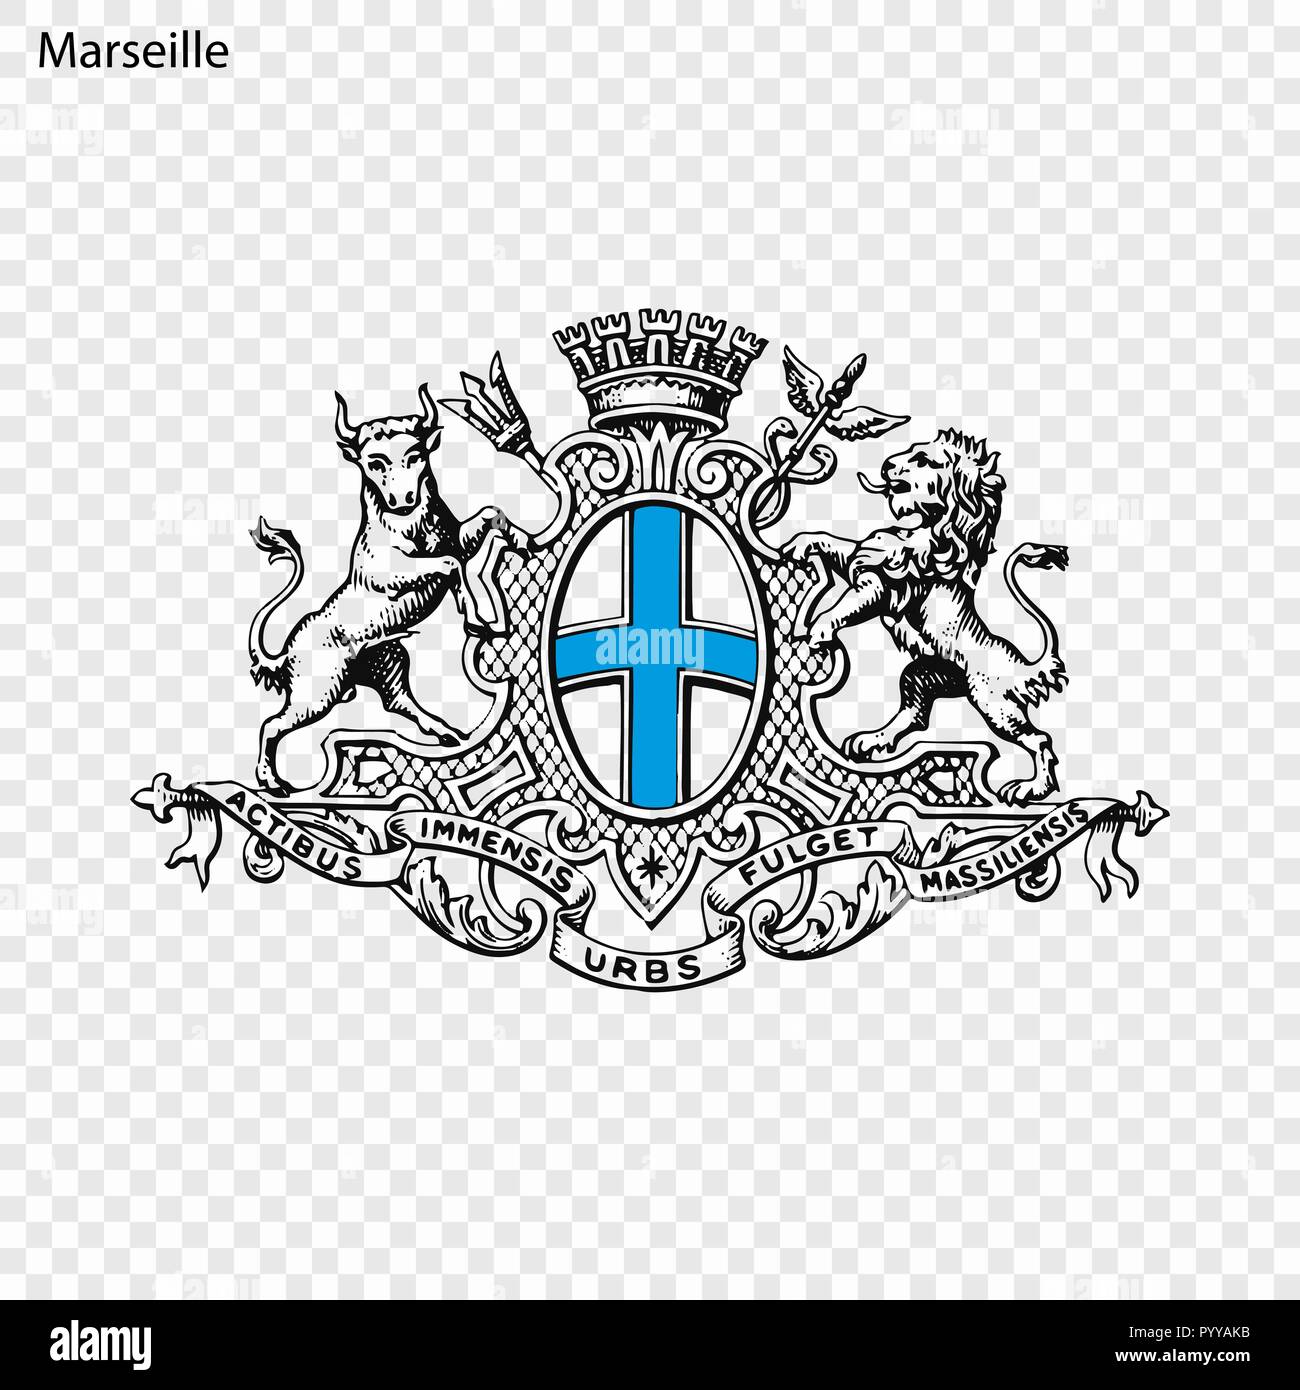 Emblem of Marseille. City of France. Vector illustration Stock